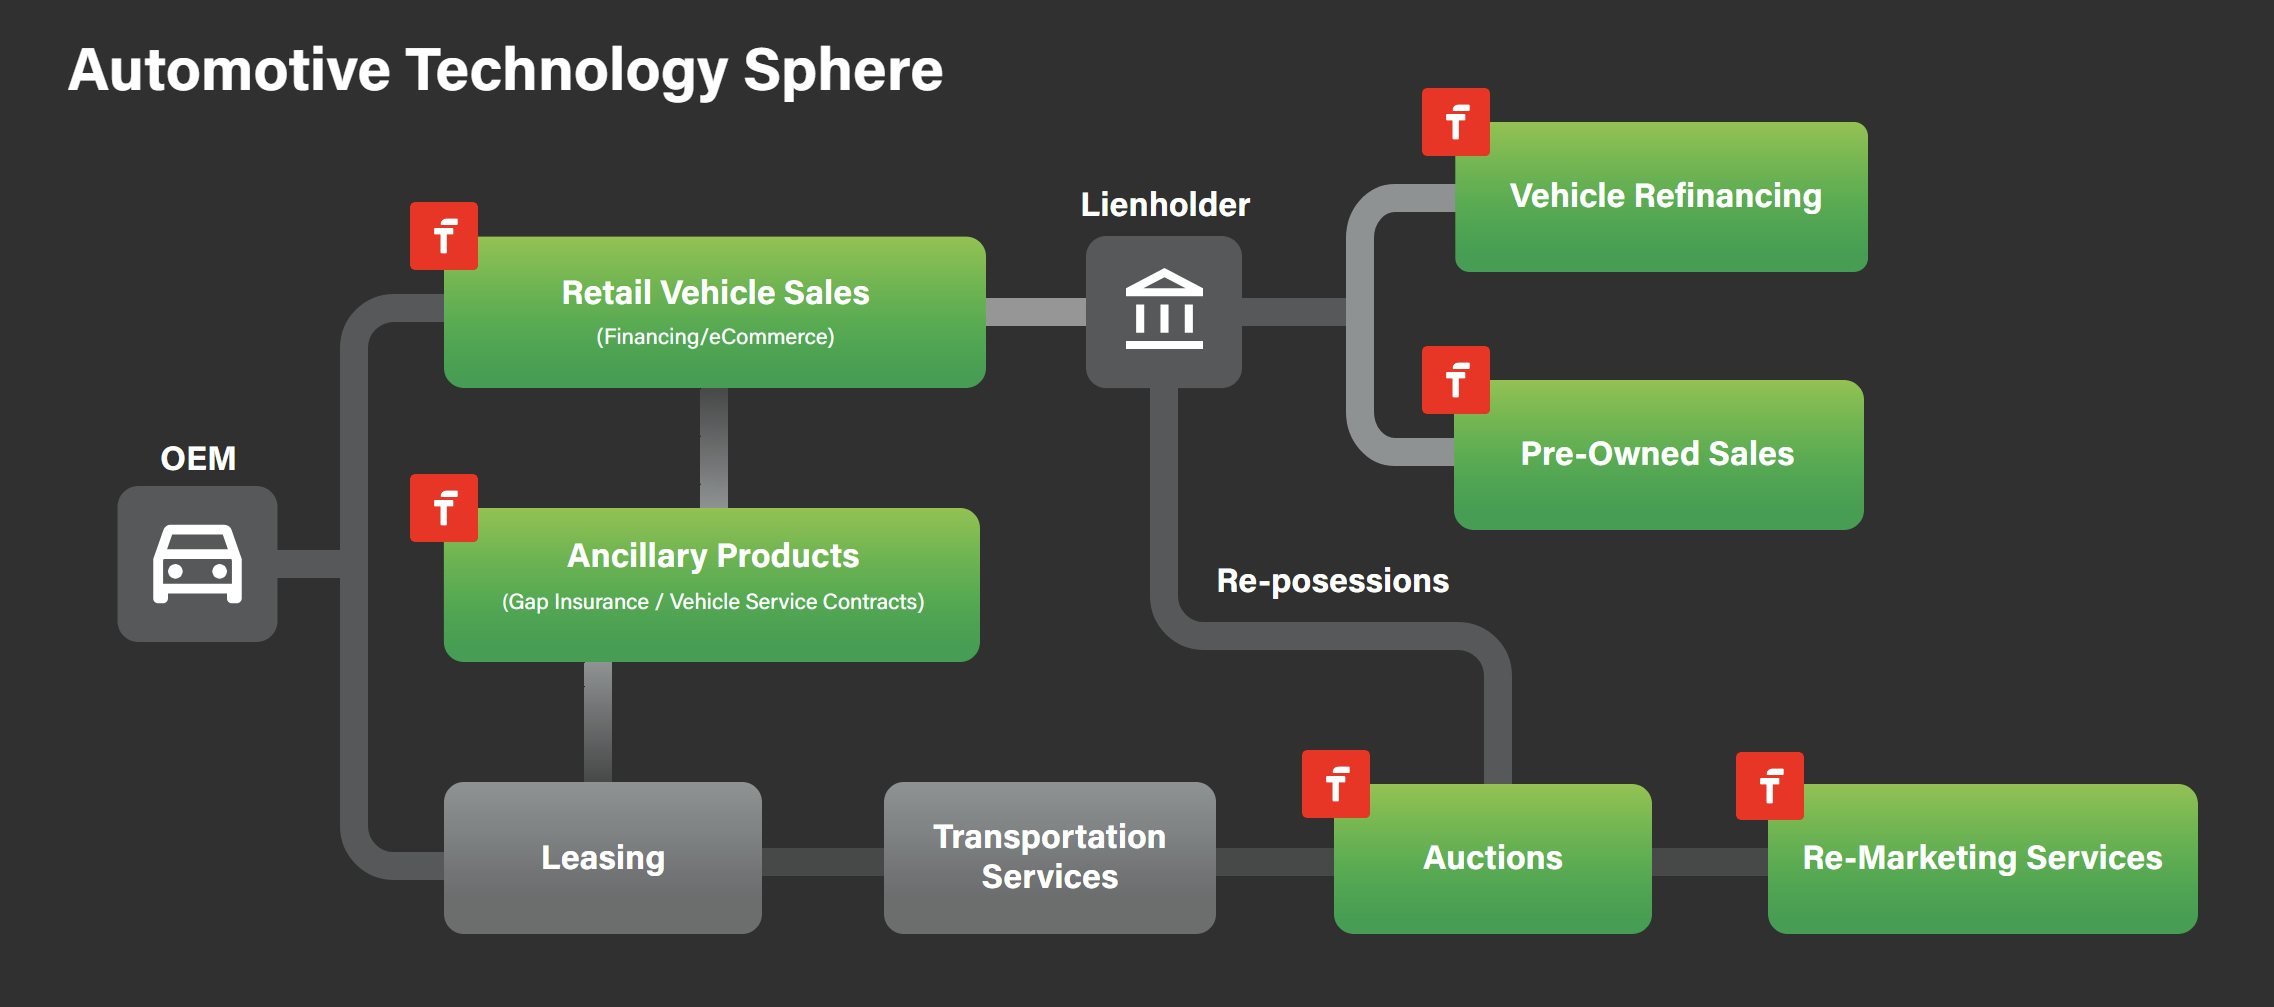 Automotive Technology Sphere